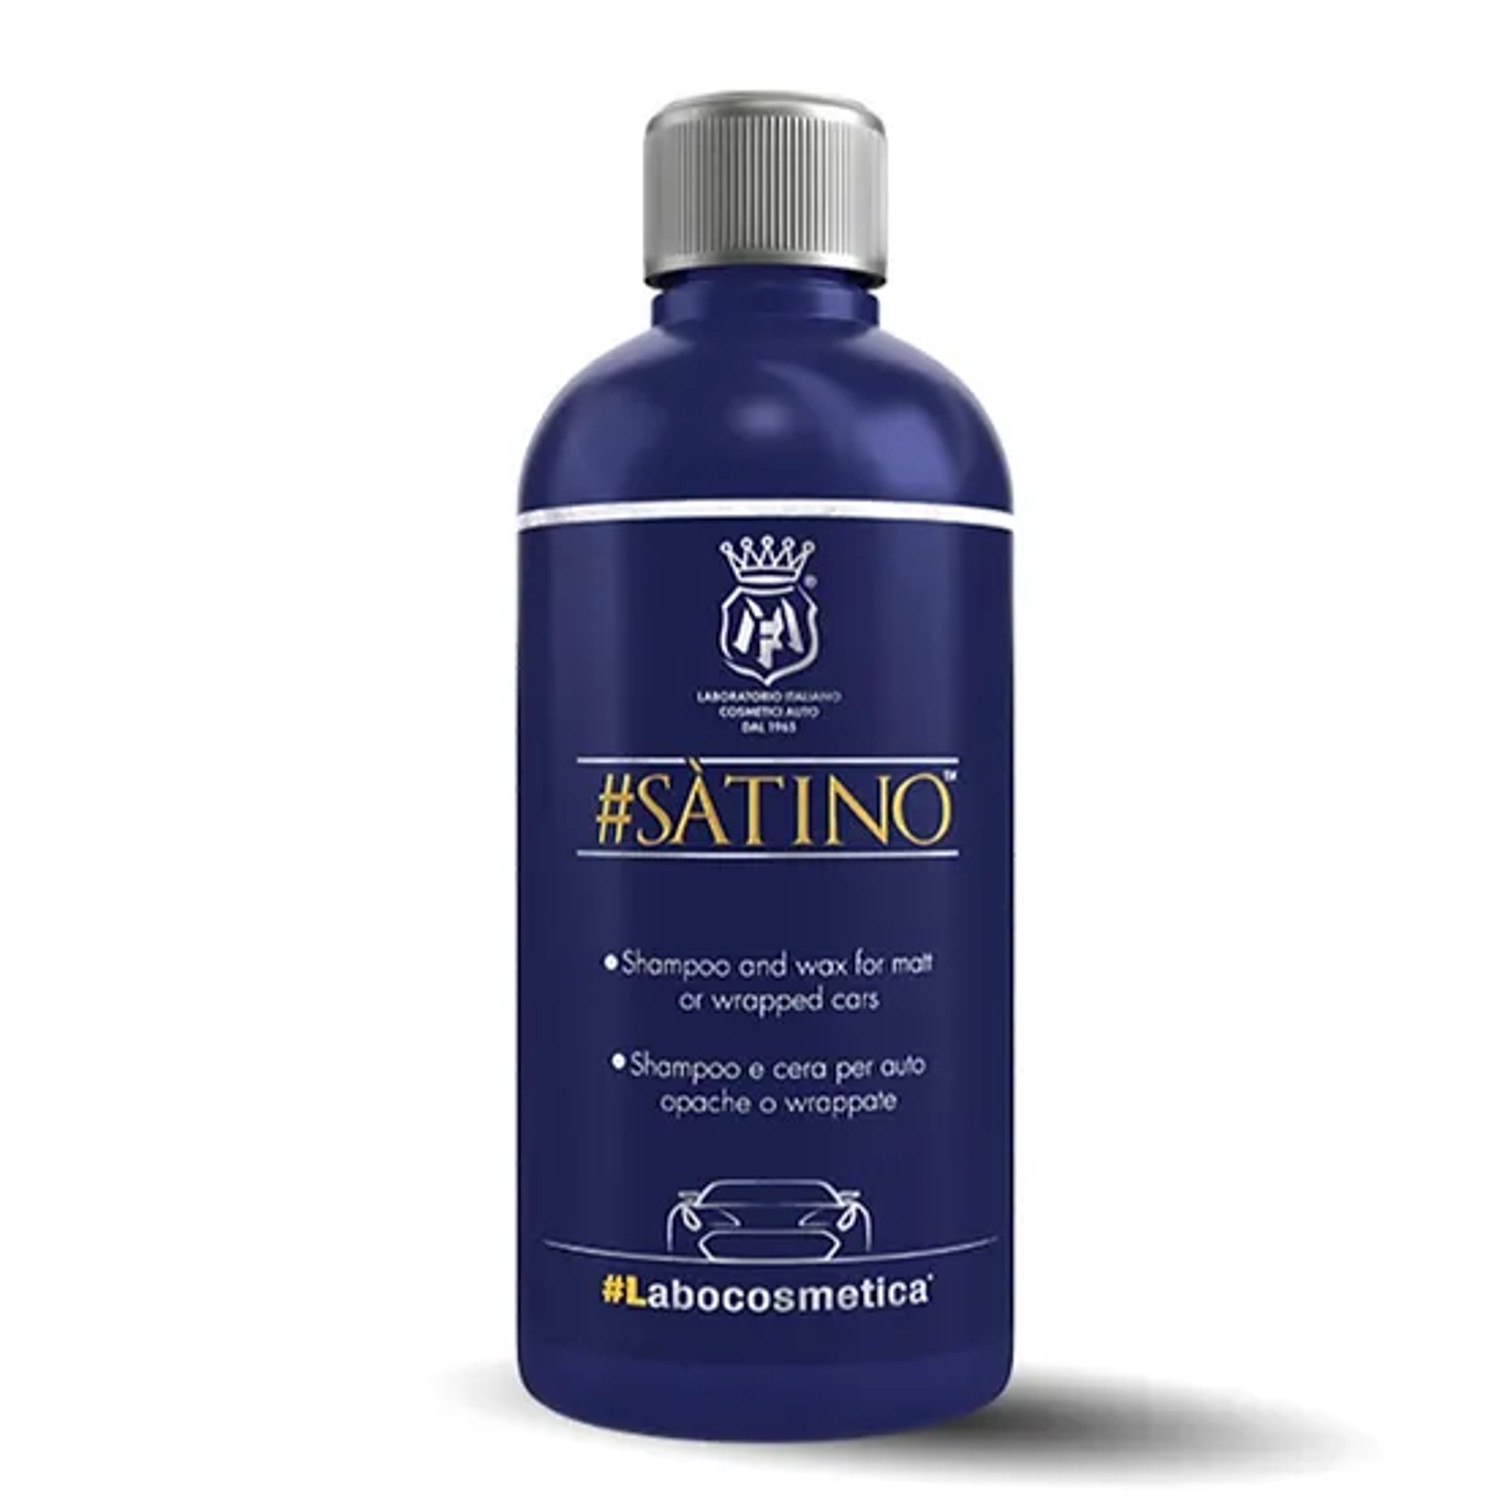 Labocosmetica SATINO 500ML, Matte Paint and Wrap Shampoo